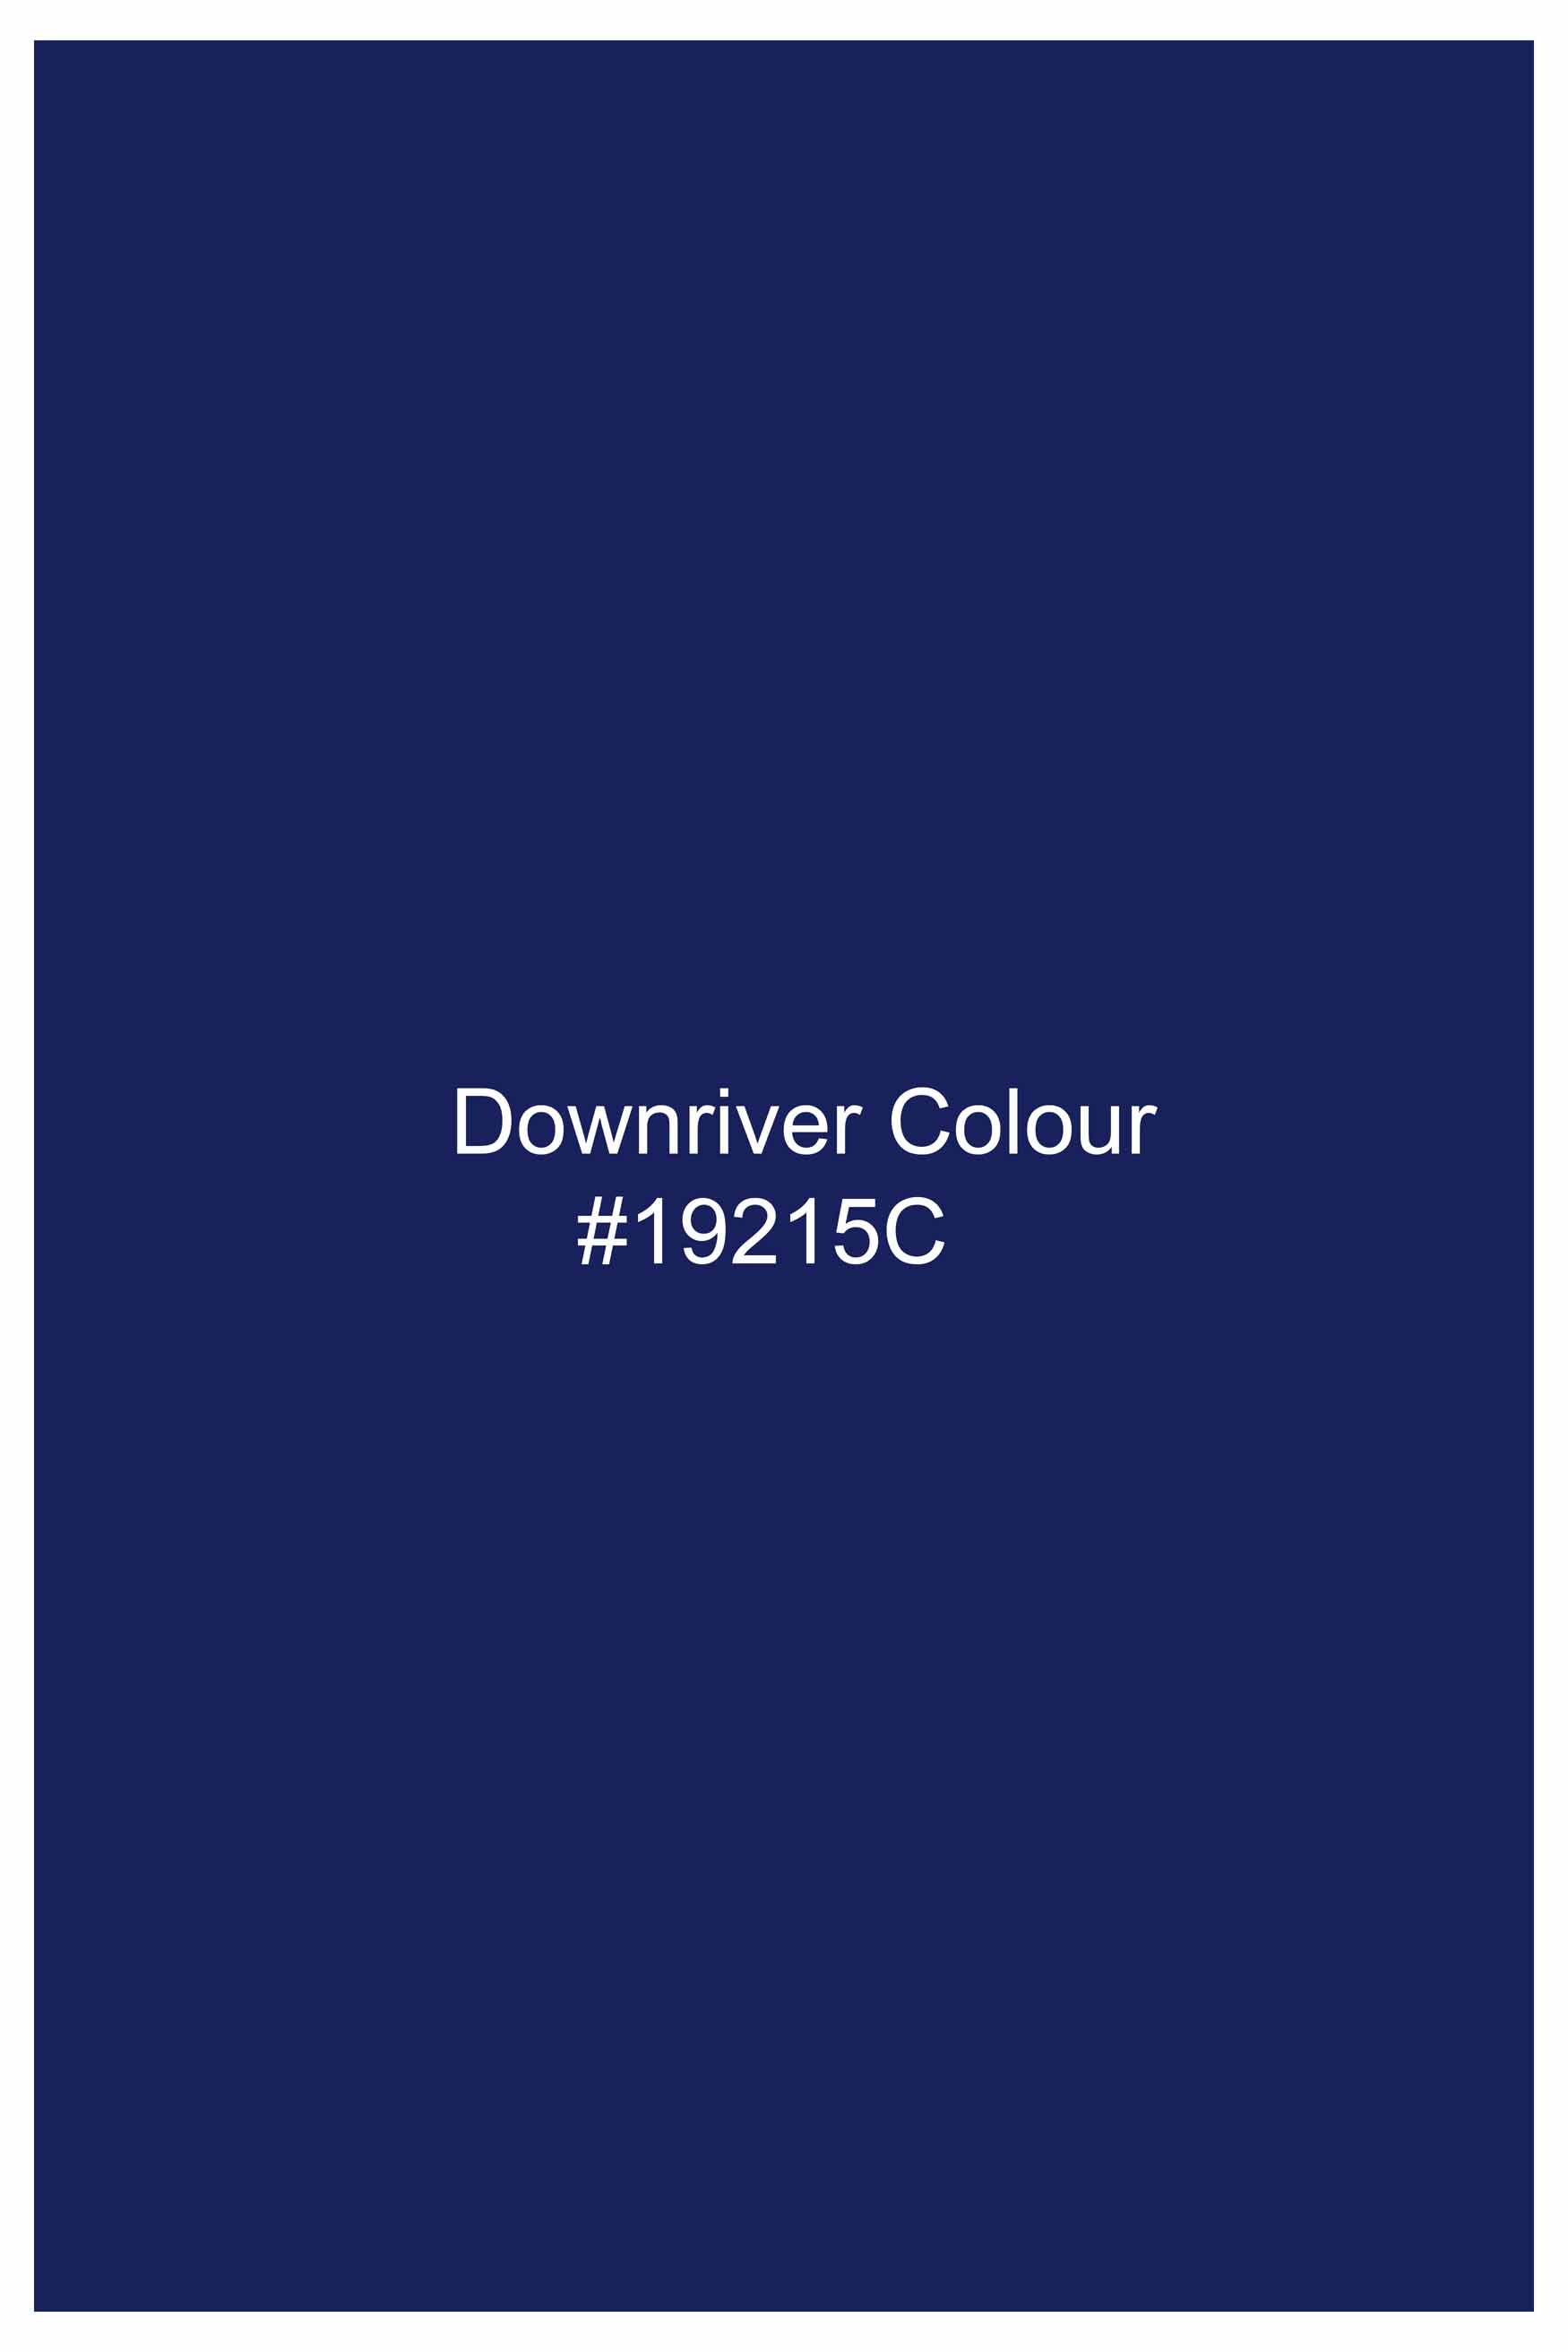 Downriver Blue Moti Work Wings Hand Stitched Royal Oxford Designer Shirt 11551-P782-E288-38, 11551-P782-E288-H-38, 11551-P782-E288-39, 11551-P782-E288-H-39, 11551-P782-E288-40, 11551-P782-E288-H-40, 11551-P782-E288-42, 11551-P782-E288-H-42, 11551-P782-E288-44, 11551-P782-E288-H-44, 11551-P782-E288-46, 11551-P782-E288-H-46, 11551-P782-E288-48, 11551-P782-E288-H-48, 11551-P782-E288-50, 11551-P782-E288-H-50, 11551-P782-E288-52, 11551-P782-E288-H-52